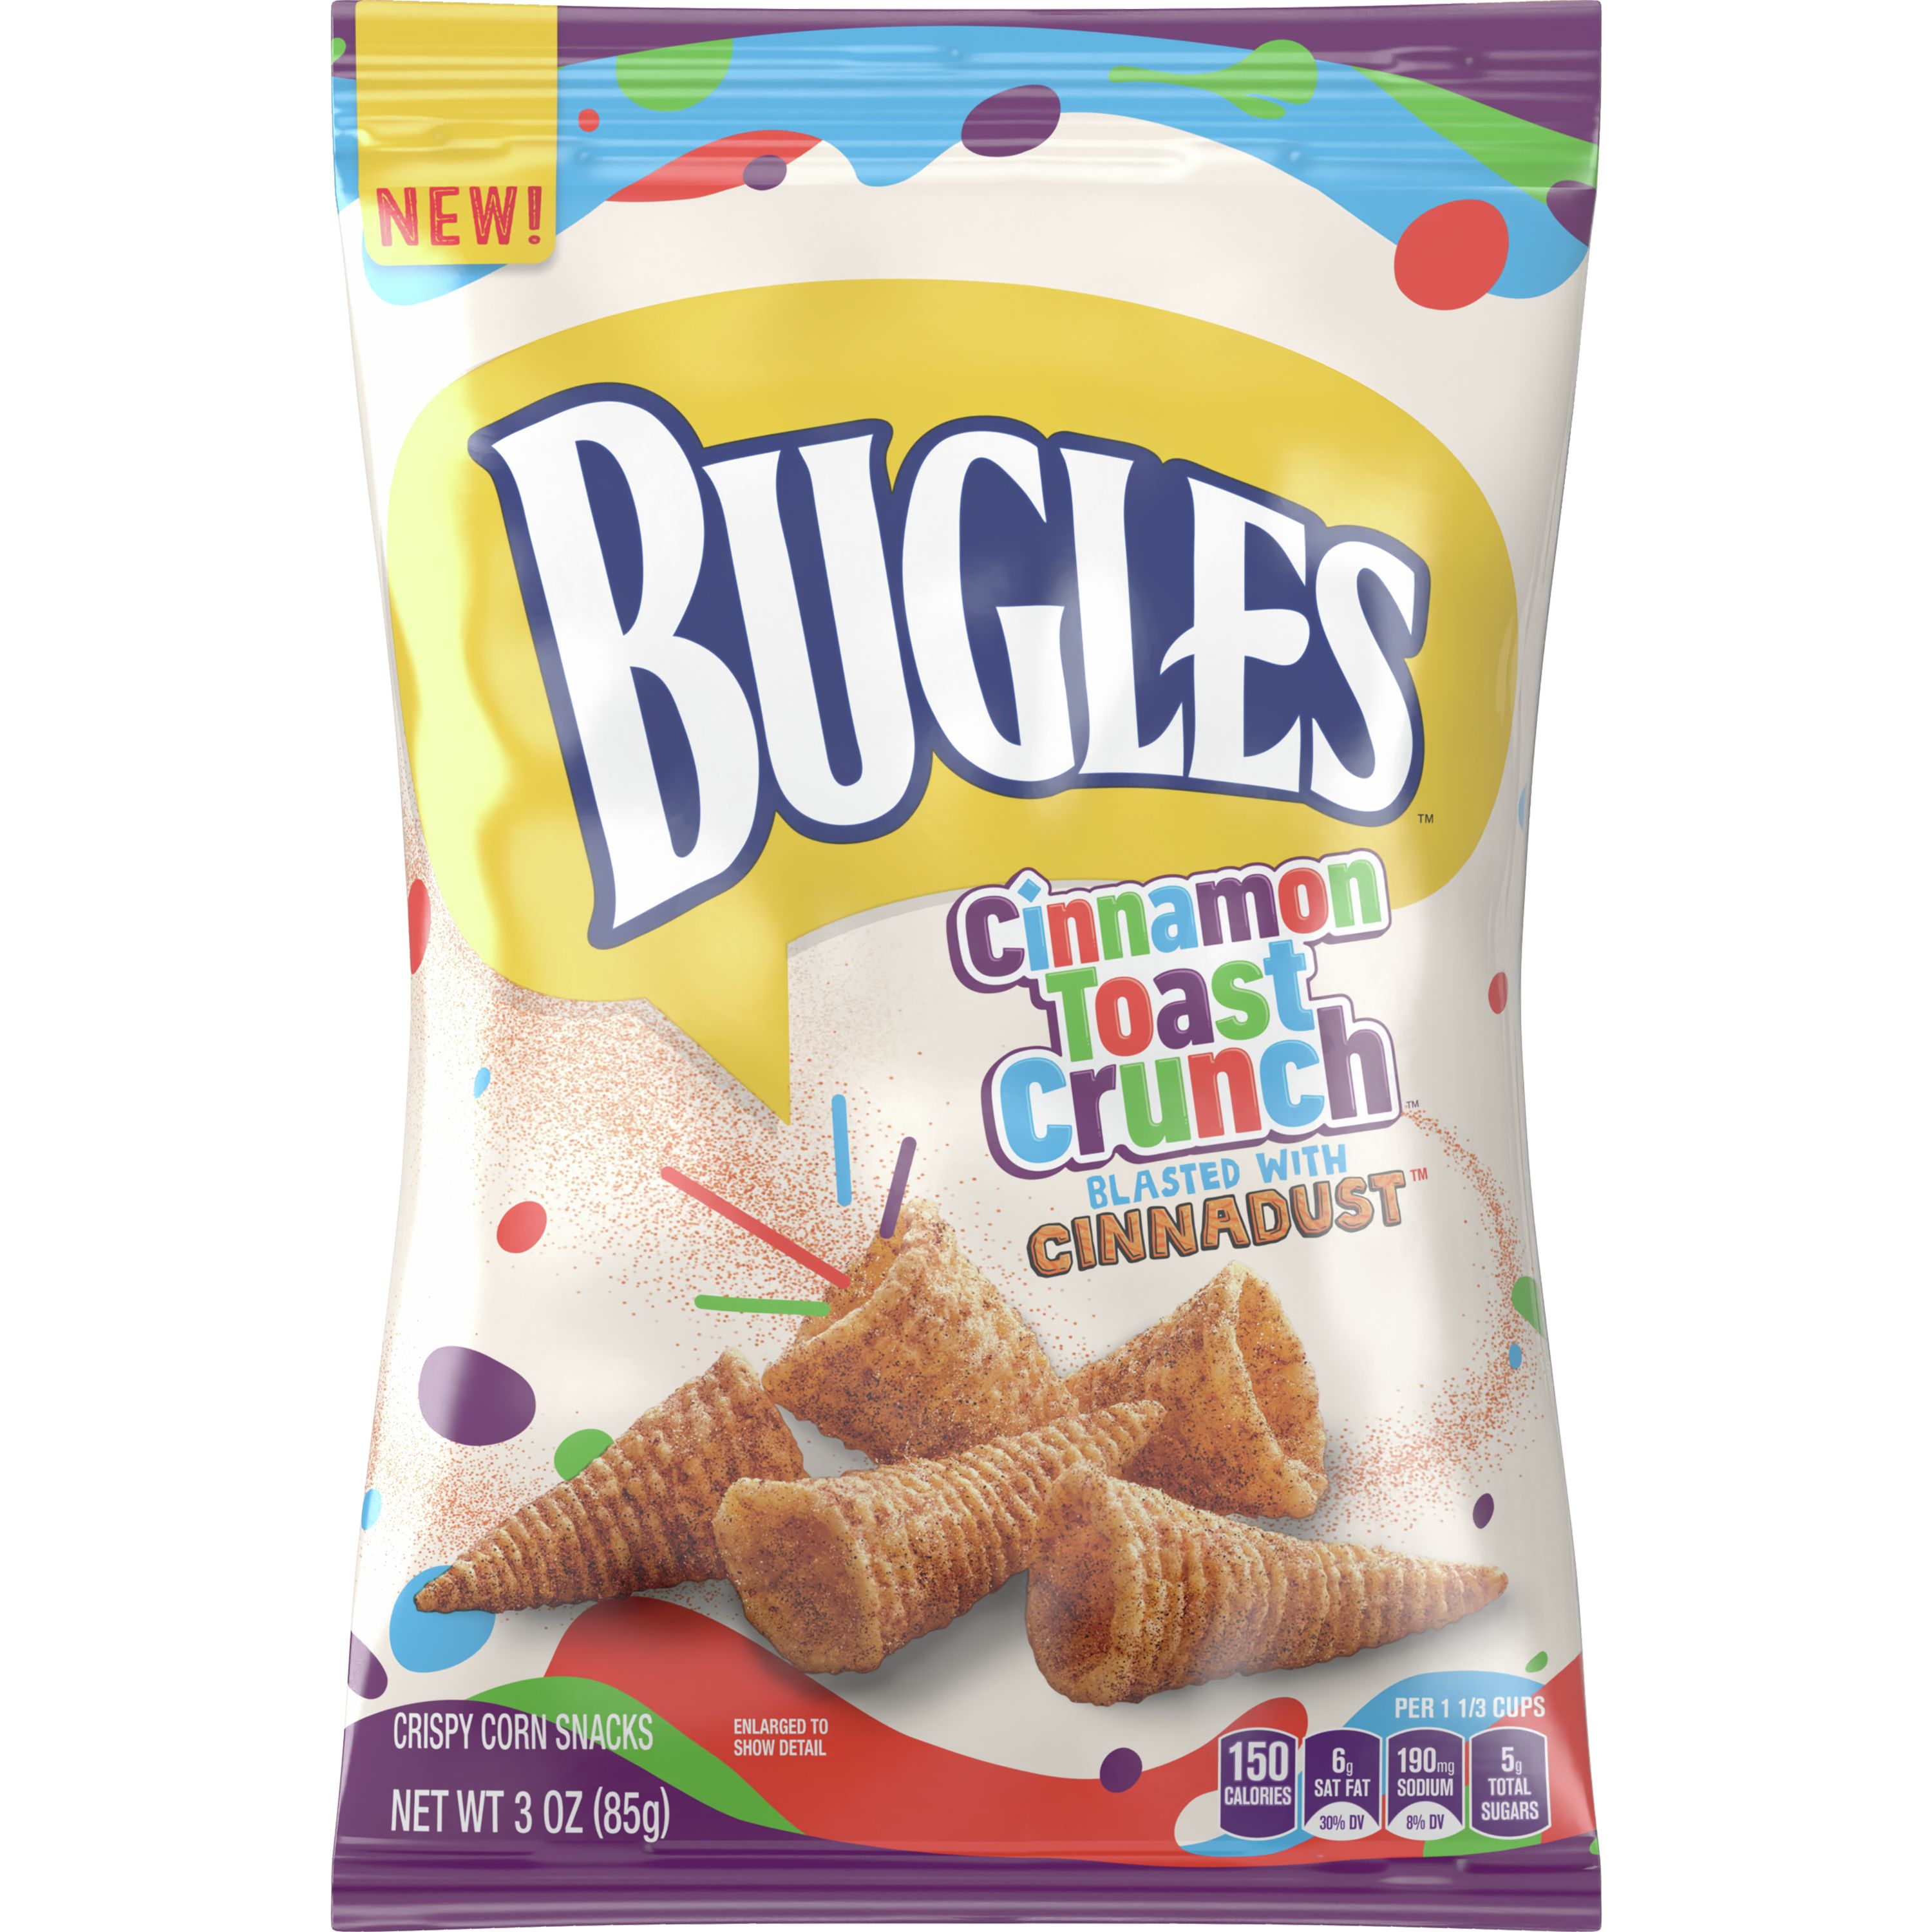 Bugles Chips | lupon.gov.ph